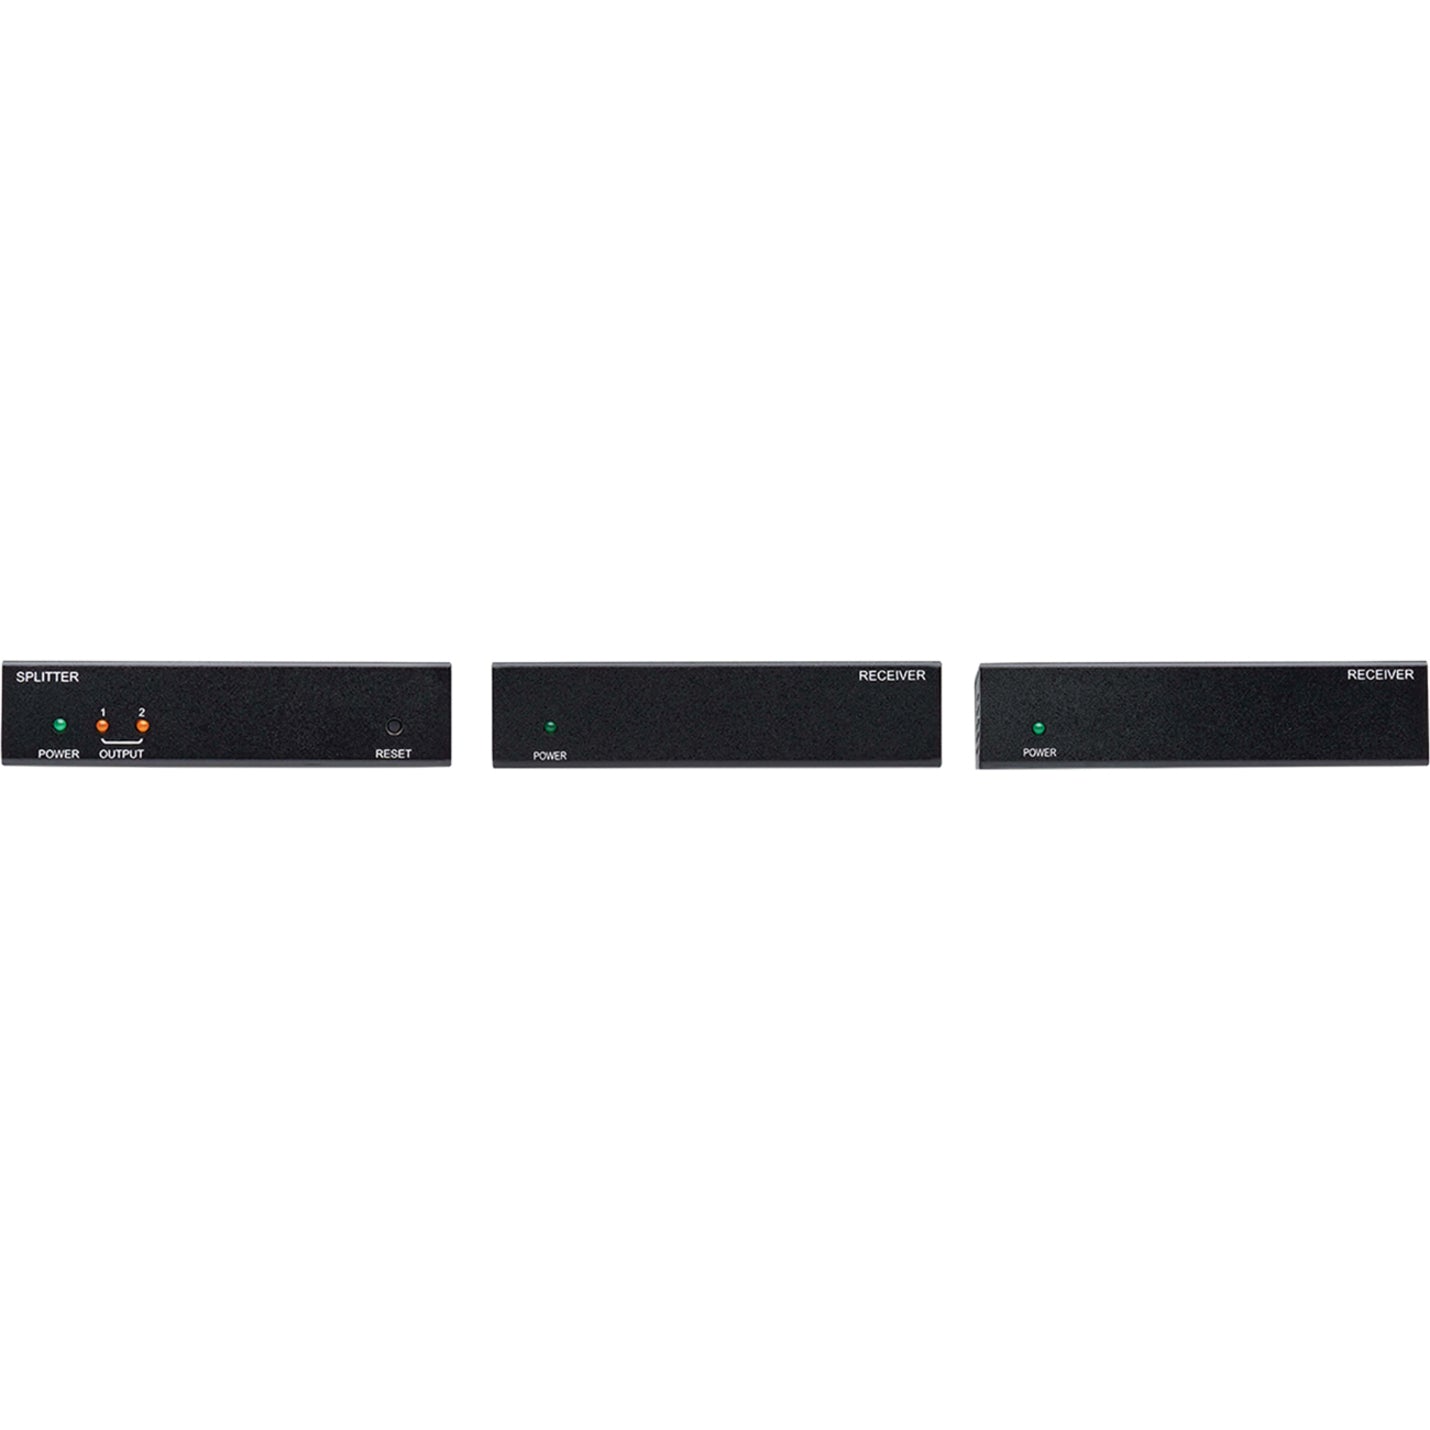 Tripp Lite B127-002-2H2 Video Extender Transmitter/Receiver HDMI Over CAT6 Splitter/Extender Kit, 4K, 3840 x 2160, TAA Compliant, 1 Year Warranty